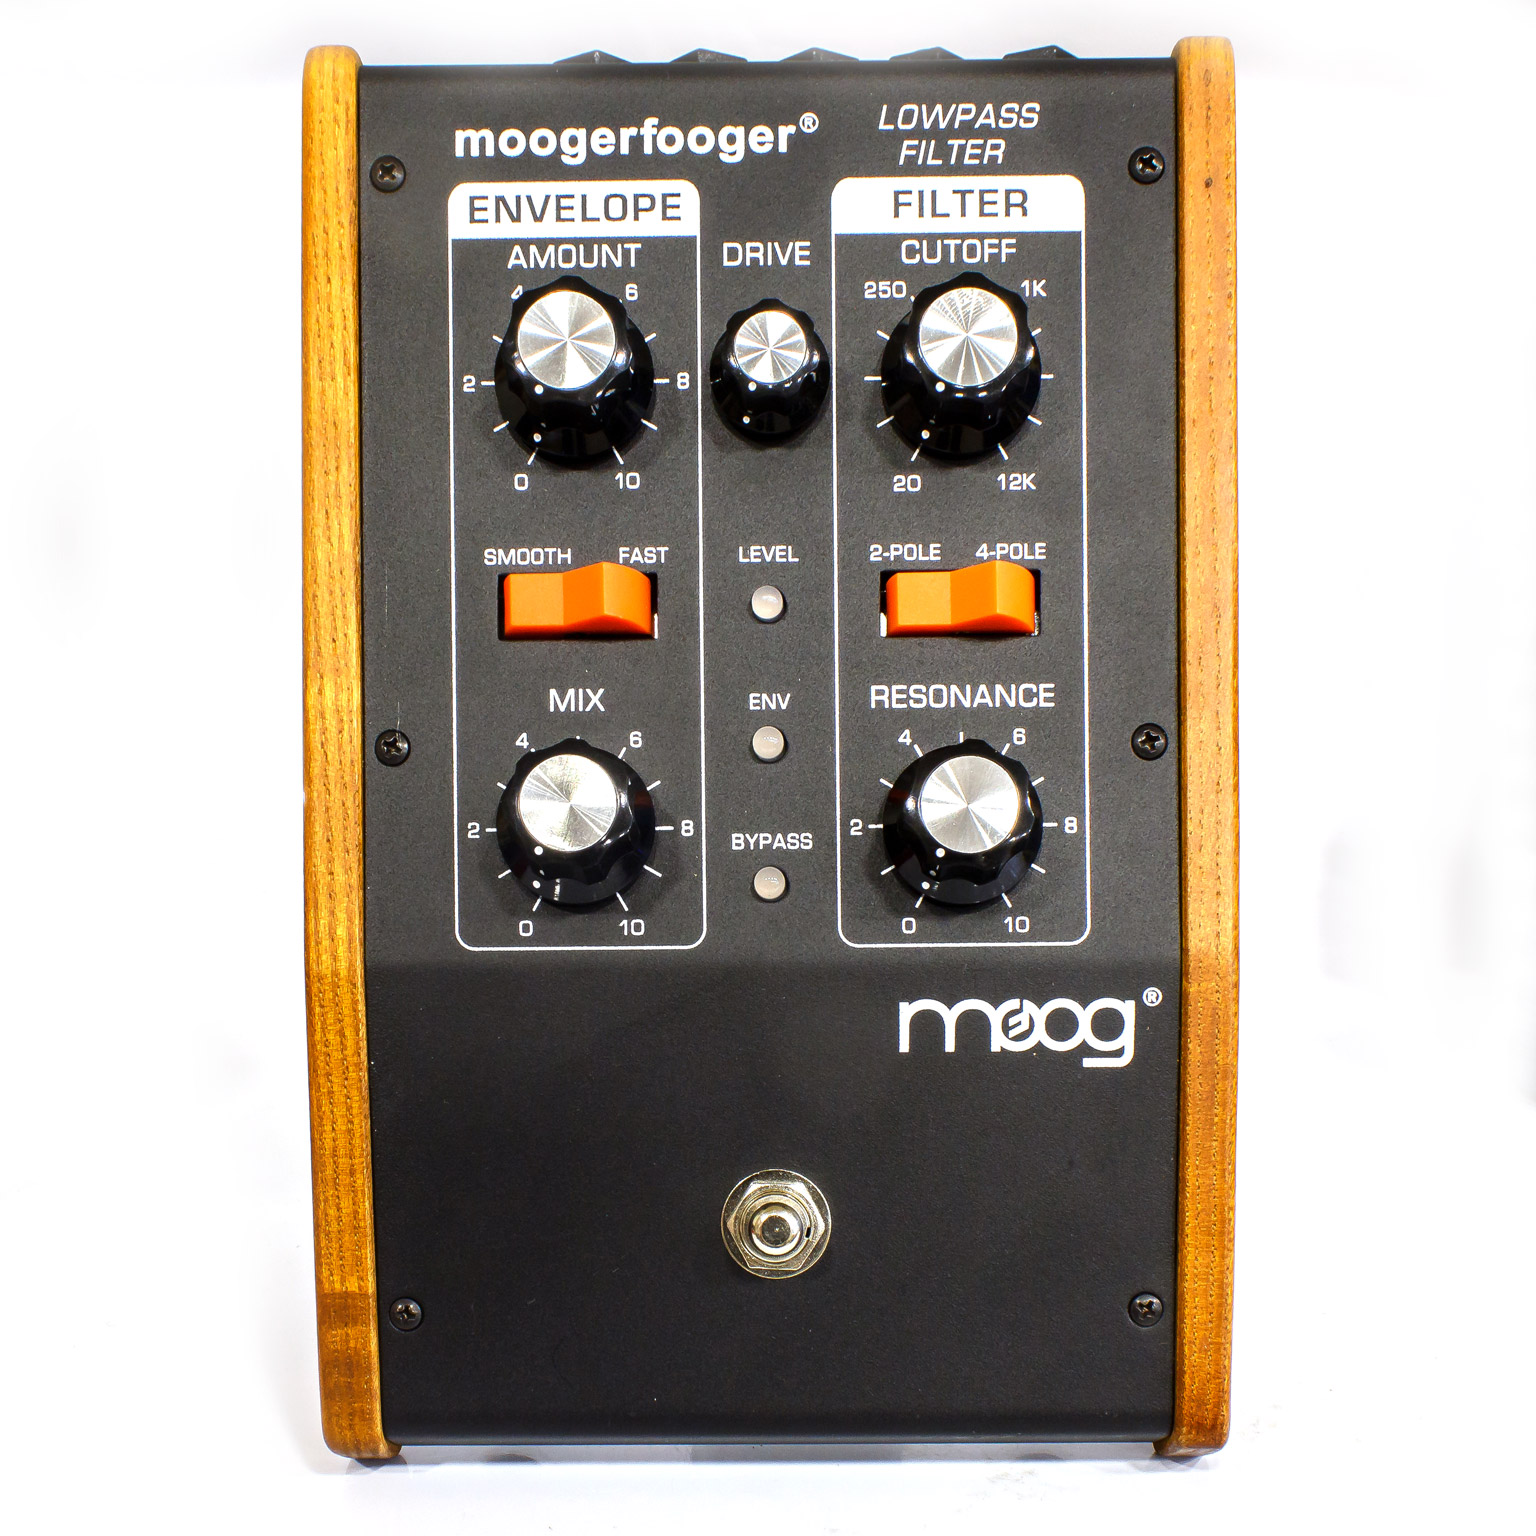 MOOG MF-101 Moogerfooger lowpass filter